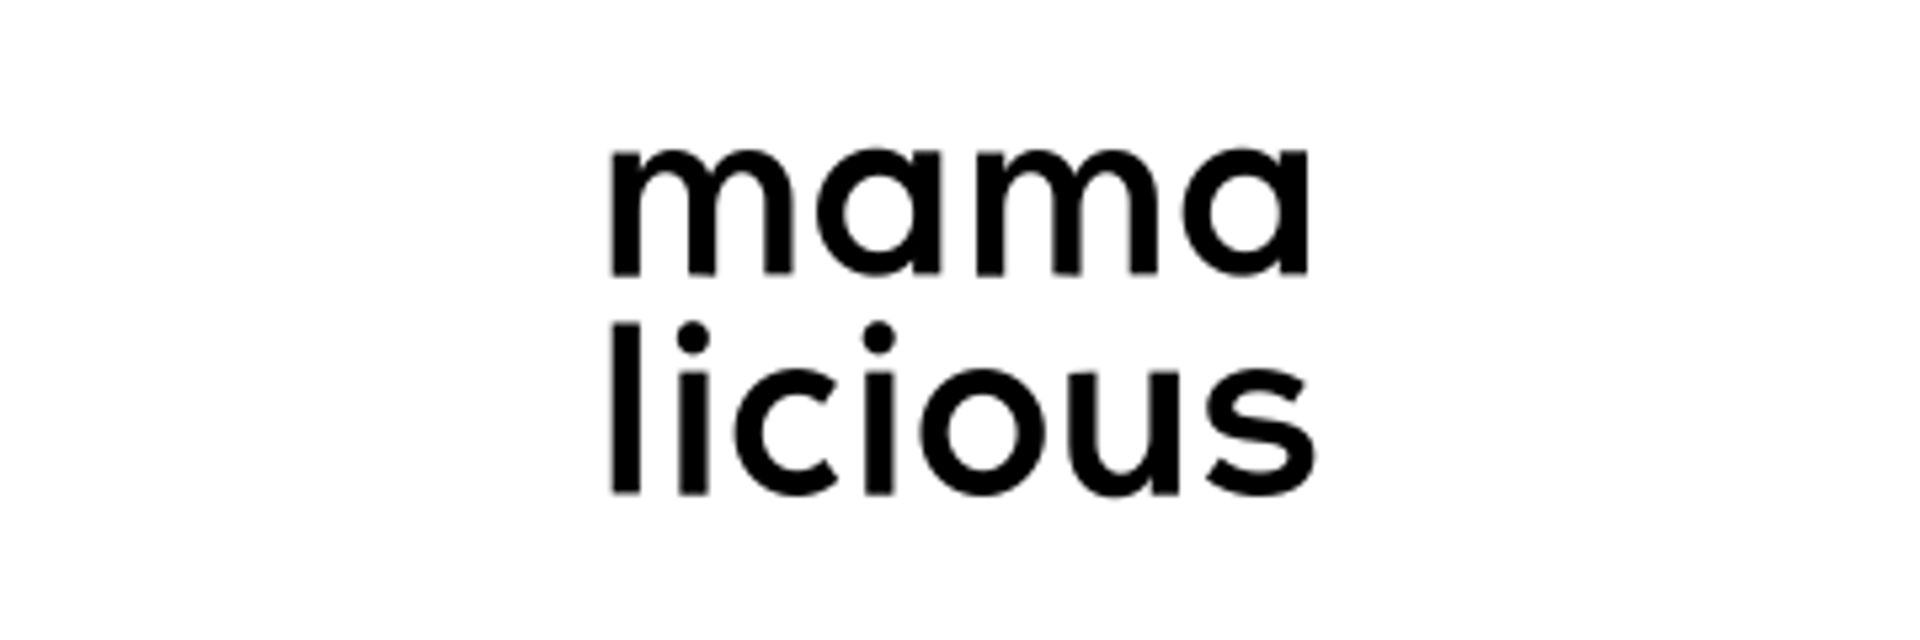 MAMALICIOUS logo. Current catalogue